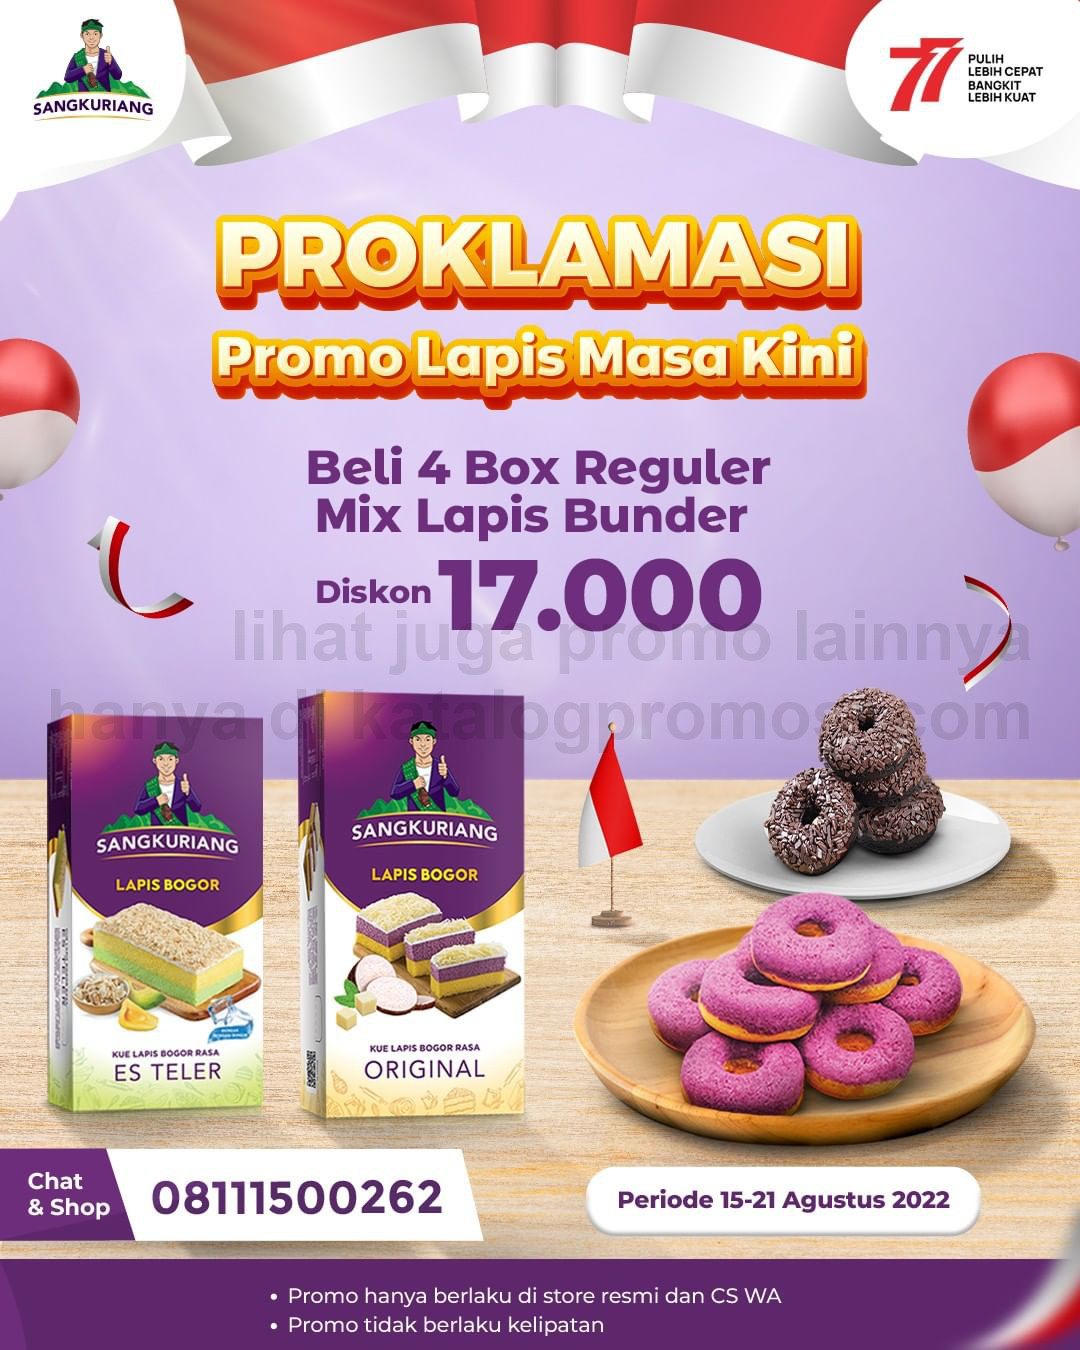 Promo Lapis Bogor Sangkuriang PROKLAMASI - DISKON Rp. 17.000 untuk pembelian 4 box reguler Lapis Bogor Sangkuriang mix Lapis Bunder